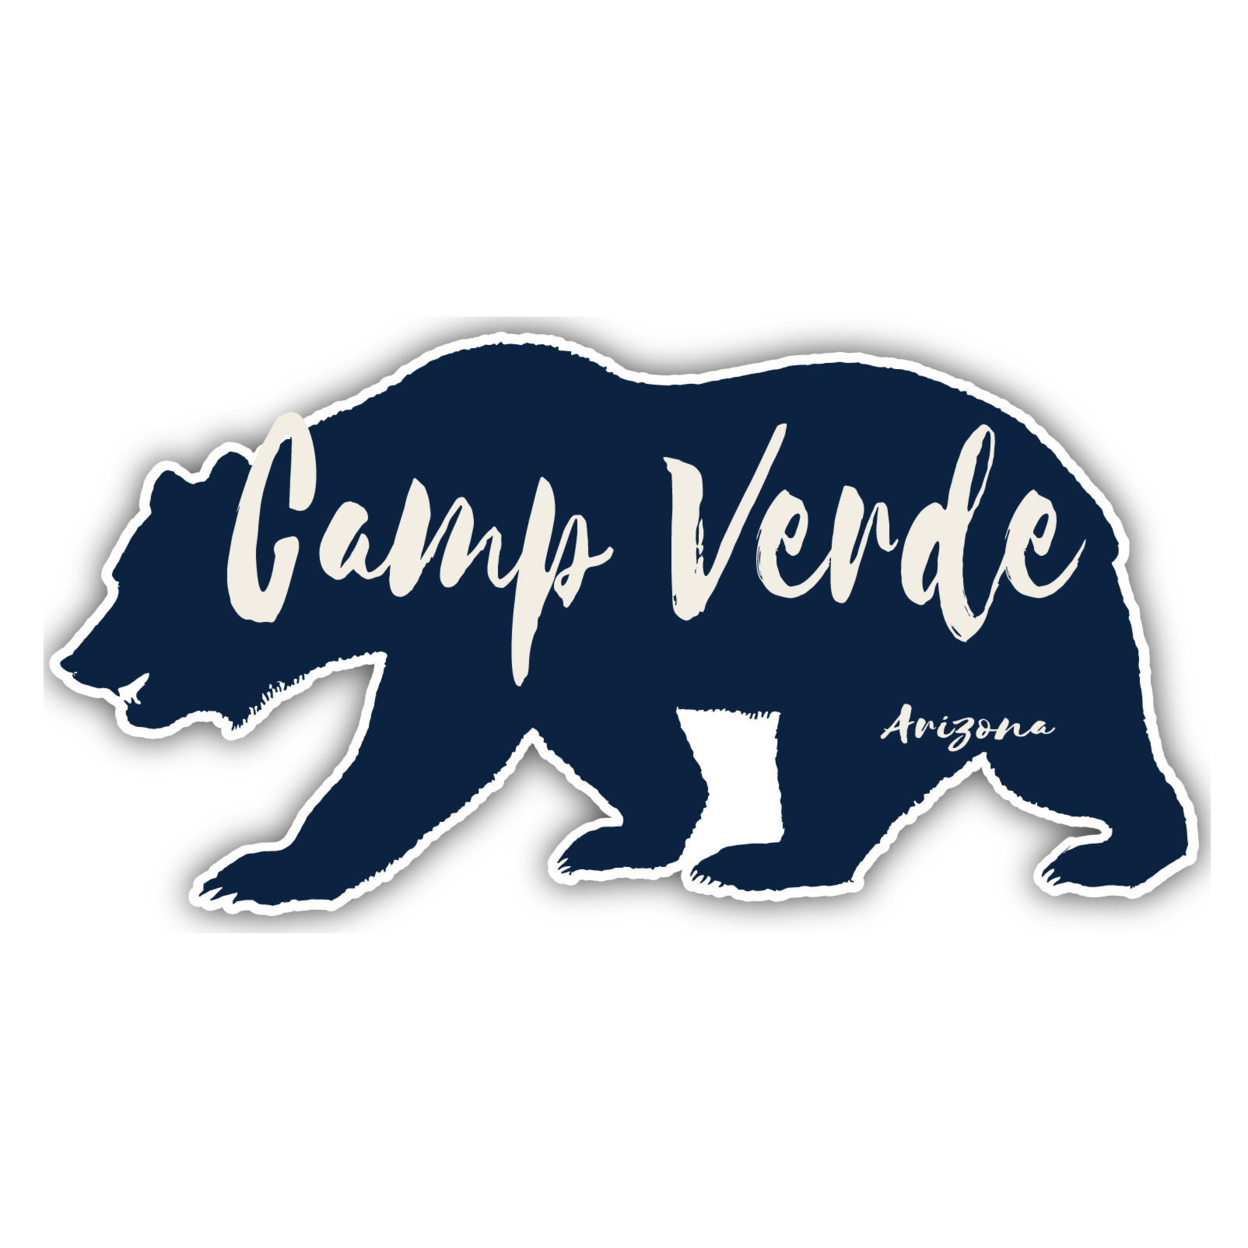 Camp Verde Arizona Souvenir Decorative Stickers (Choose Theme And Size) - 4-Pack, 4-Inch, Bear